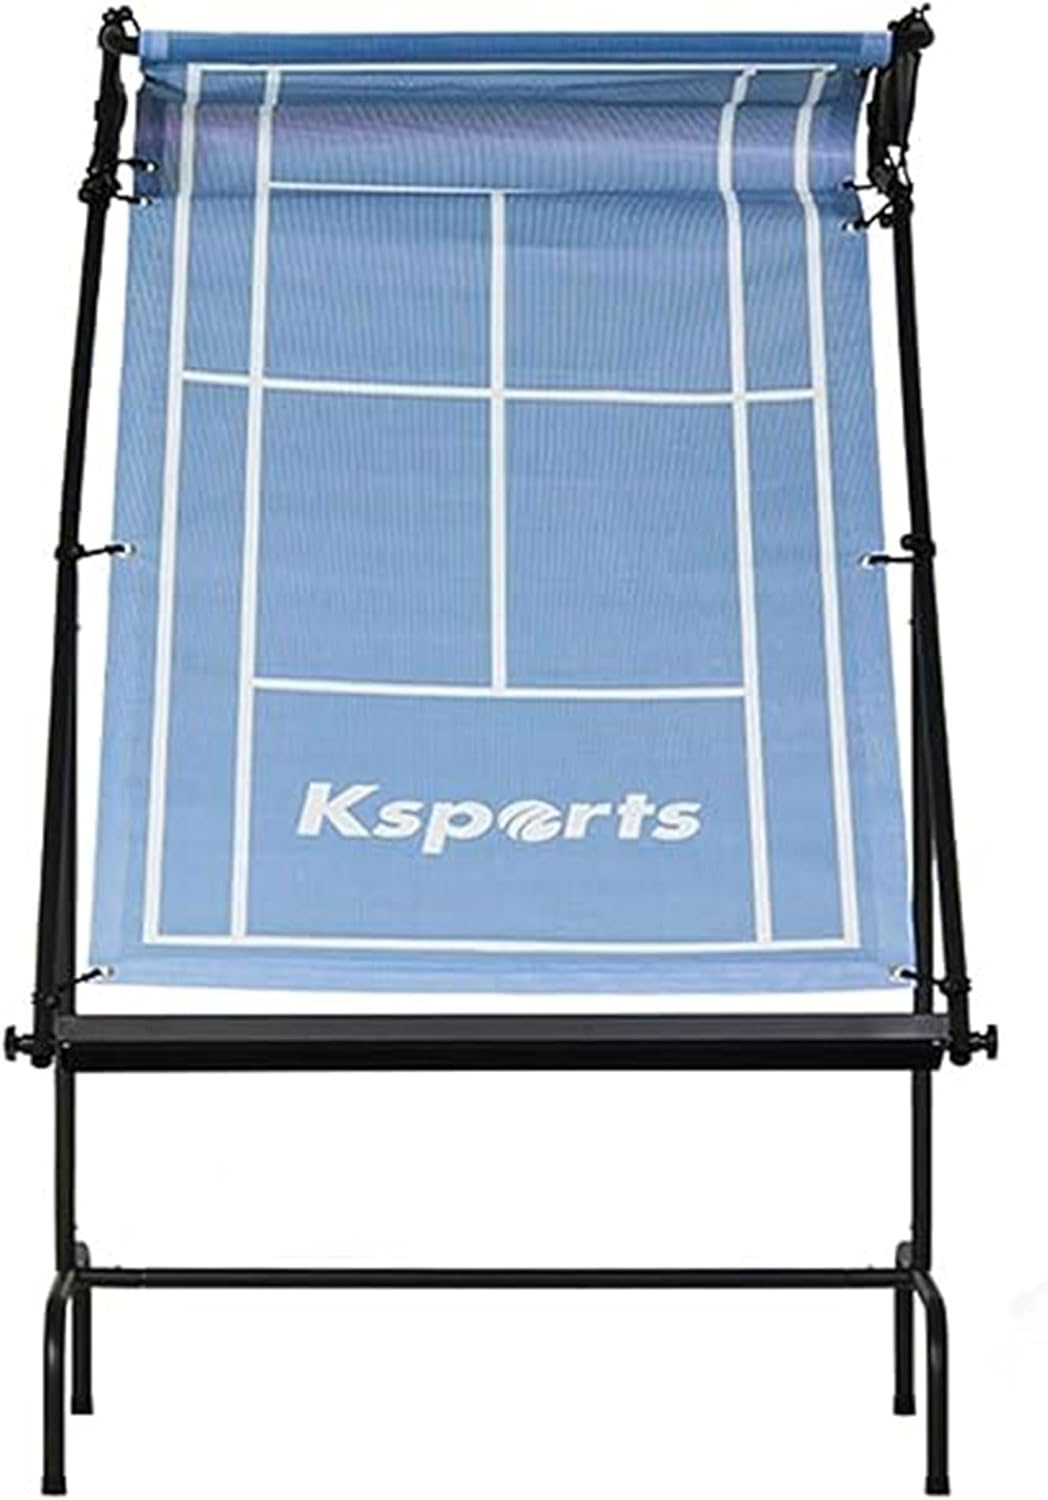 Ksports Tennis Rebounder Net Regular Blue (KSU9005)